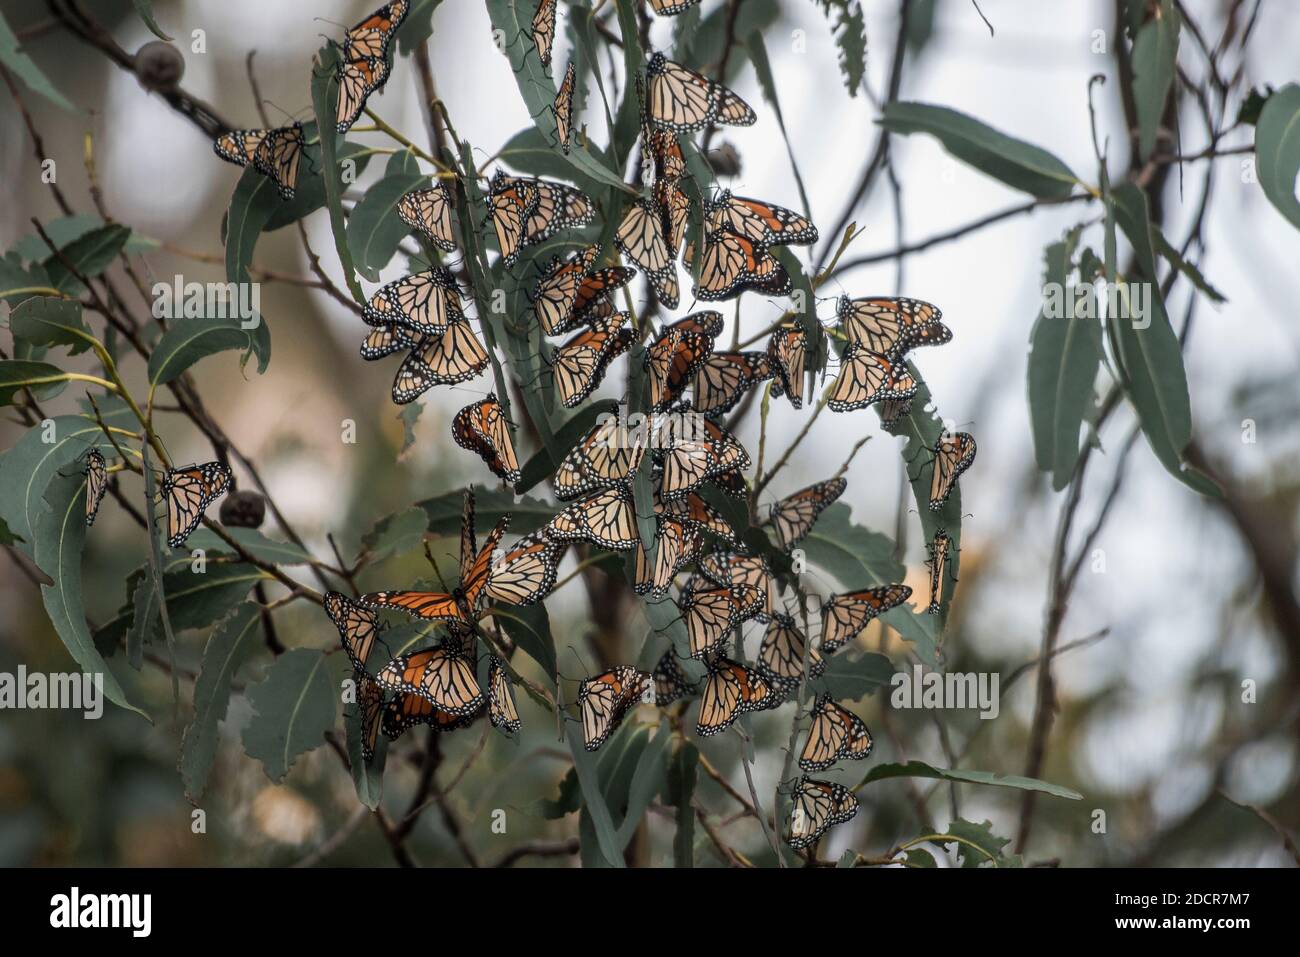 Overwintering monarch butterflies (Danaus plexippus) in November at Natural bridges state park in Santa Cruz, California. Stock Photo